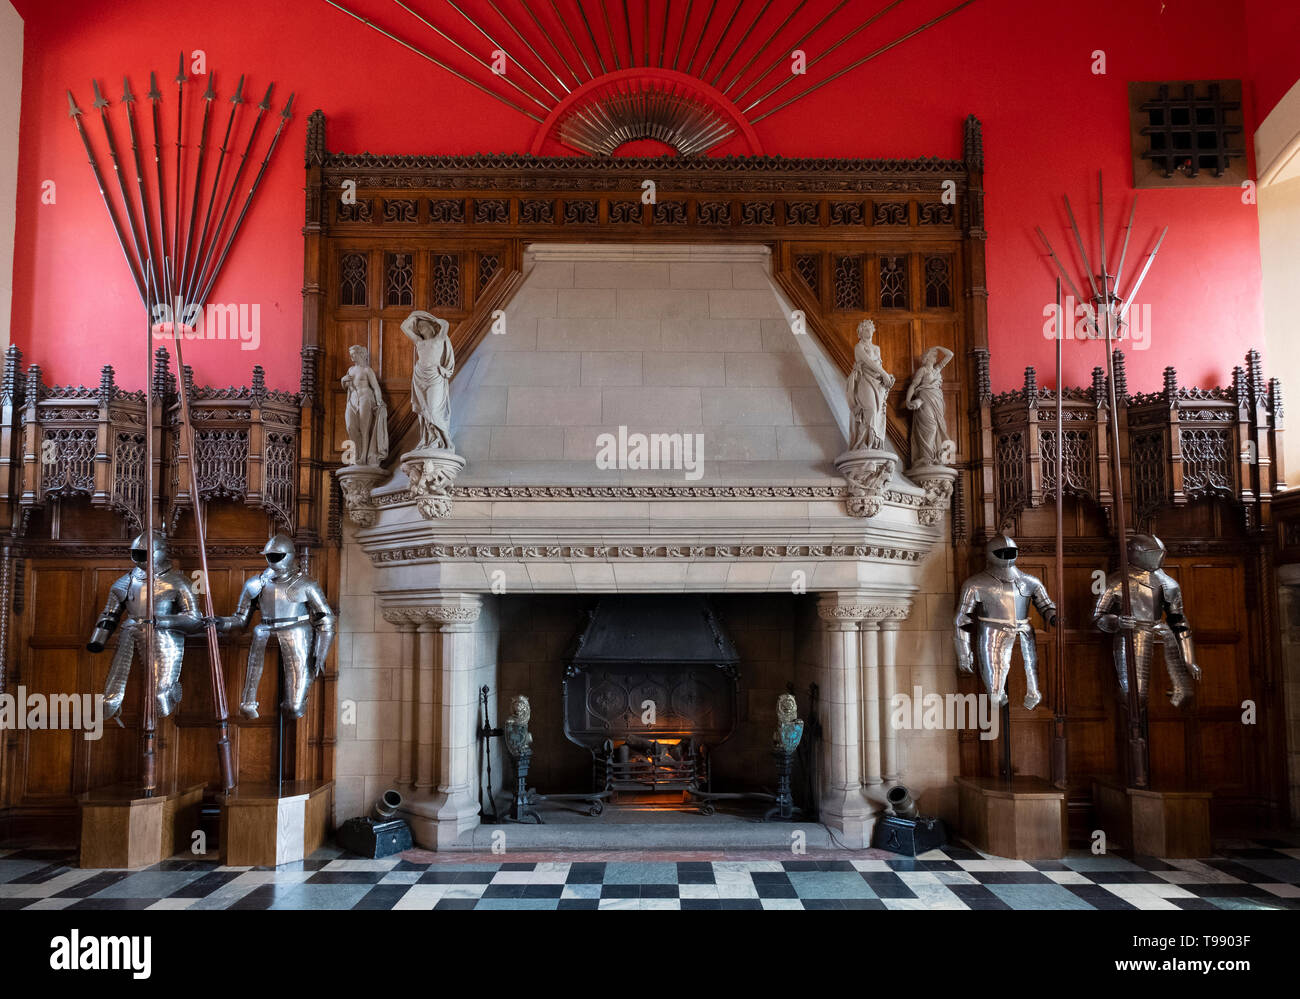 Interior of The Great Hall at Edinburgh Castle in Scotland, UK Stock Photo